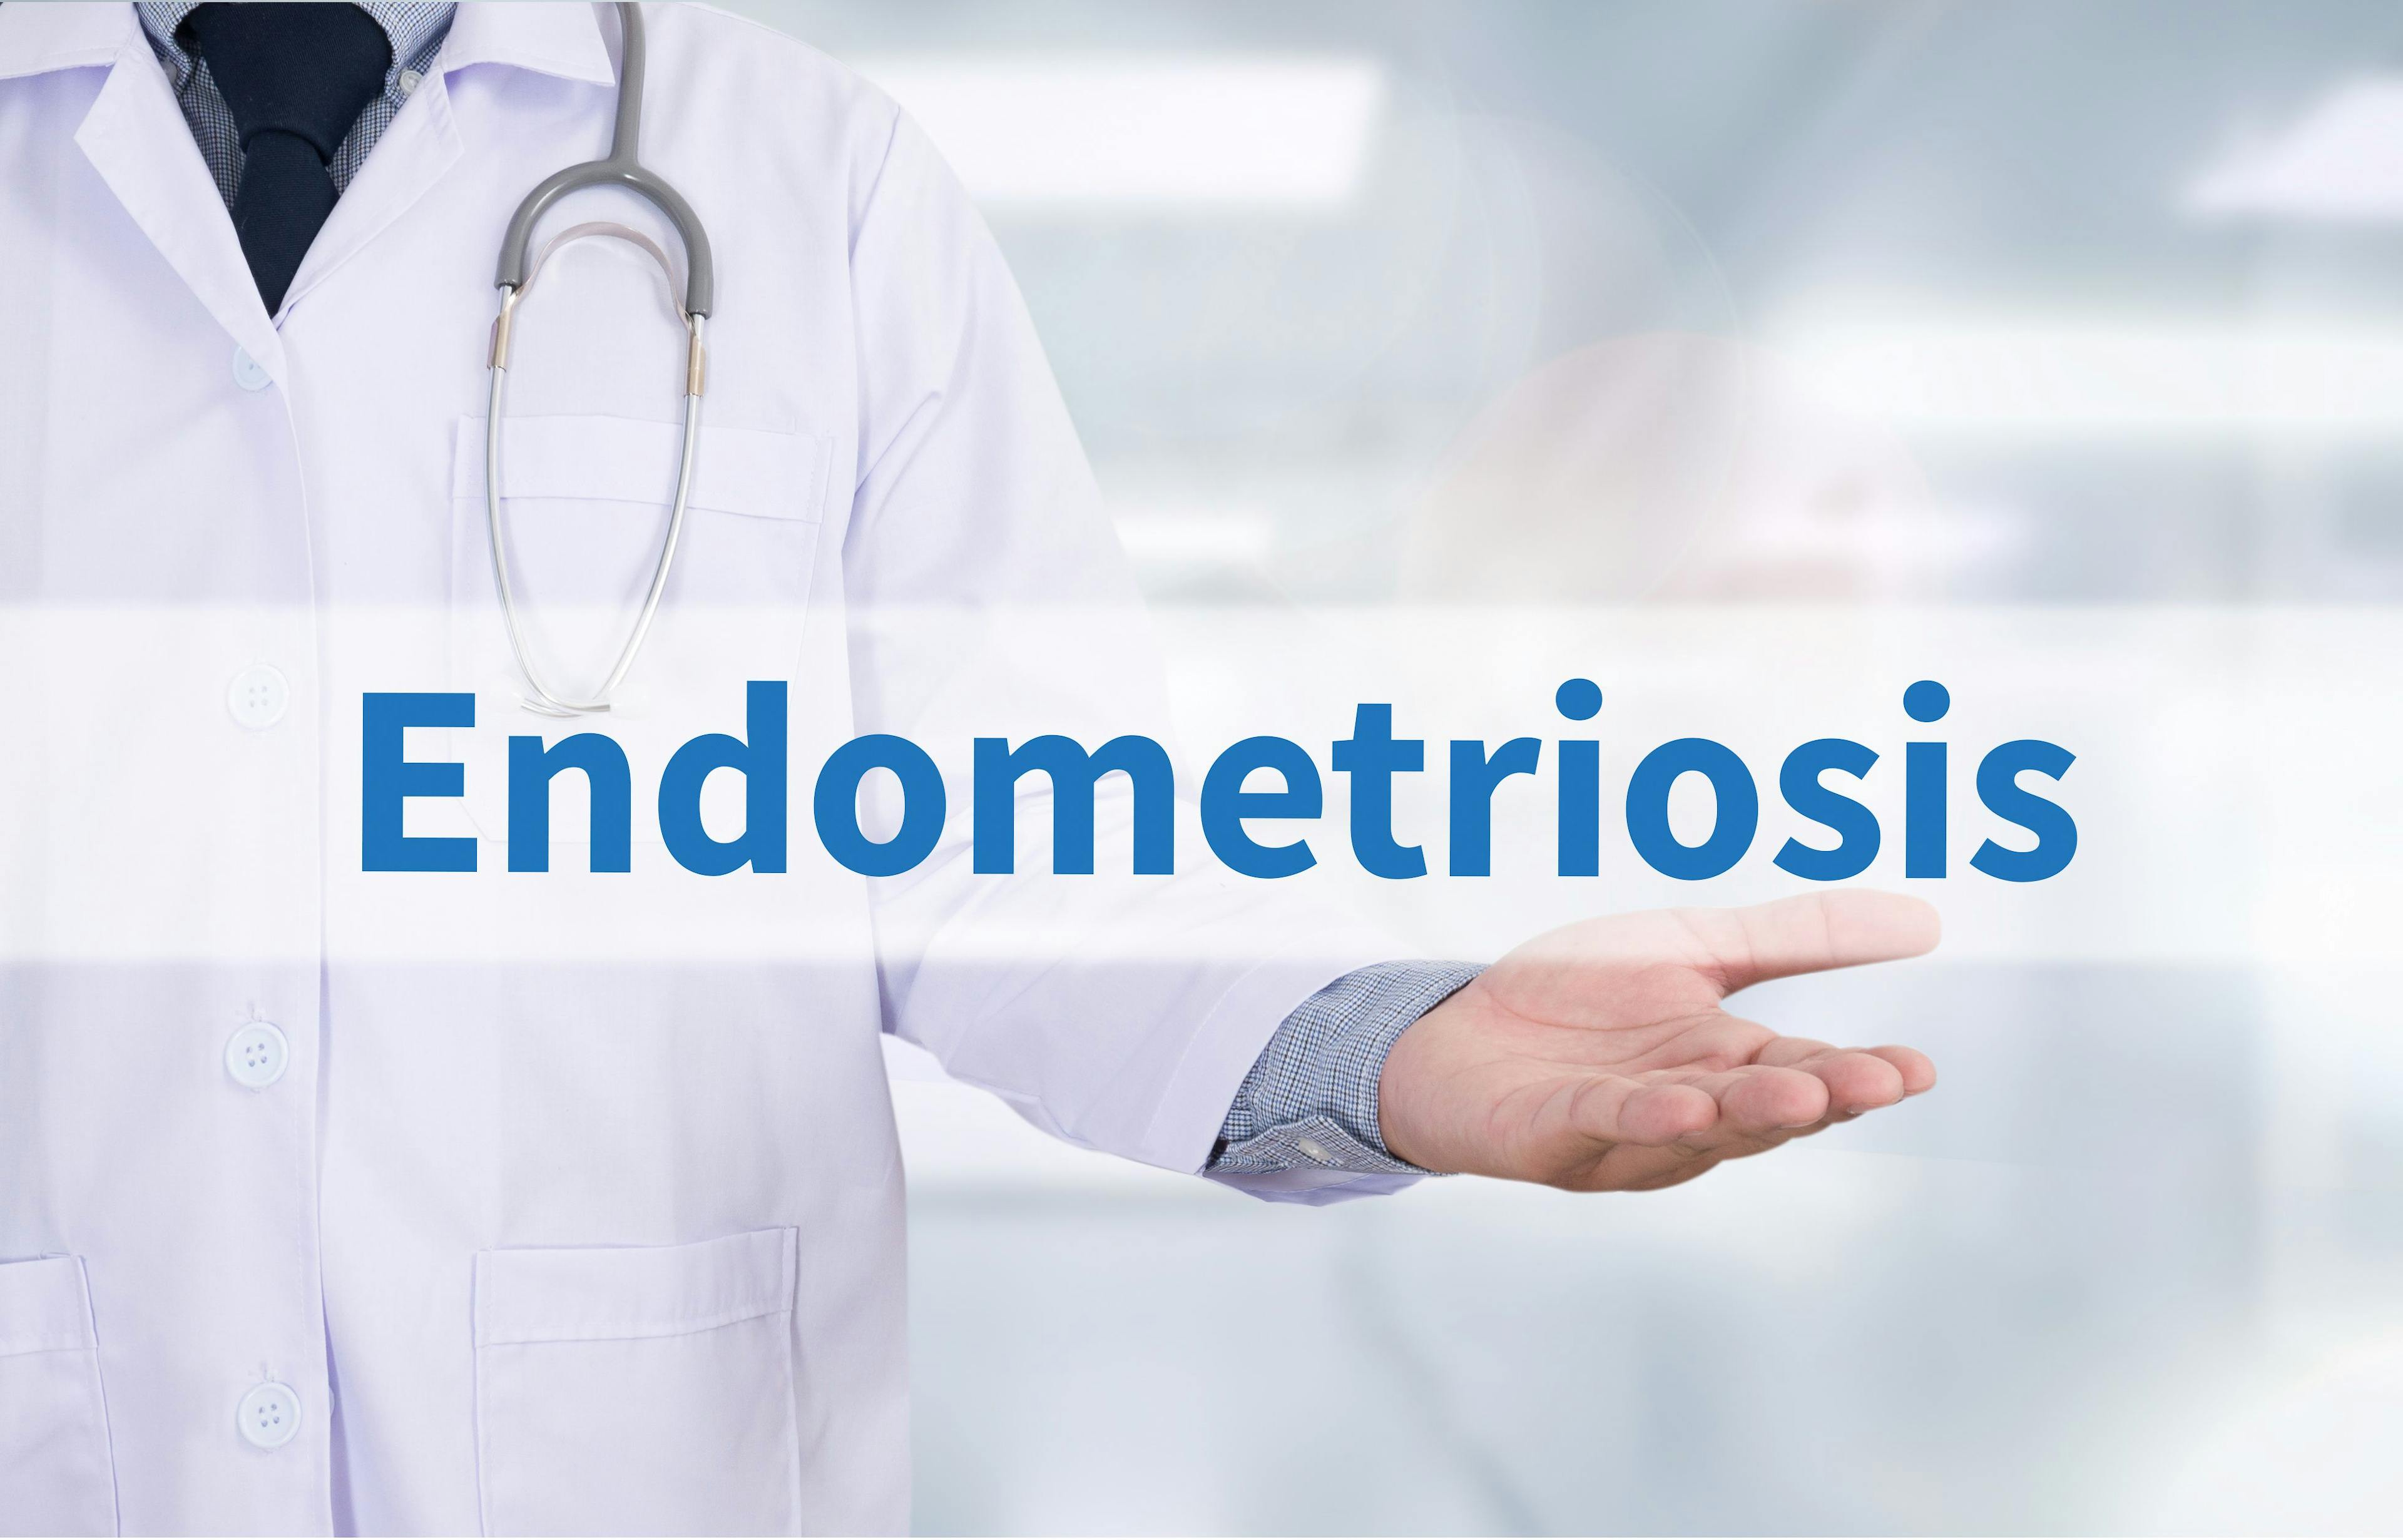 NBI and laparoscopic identification of superficial endometriosis